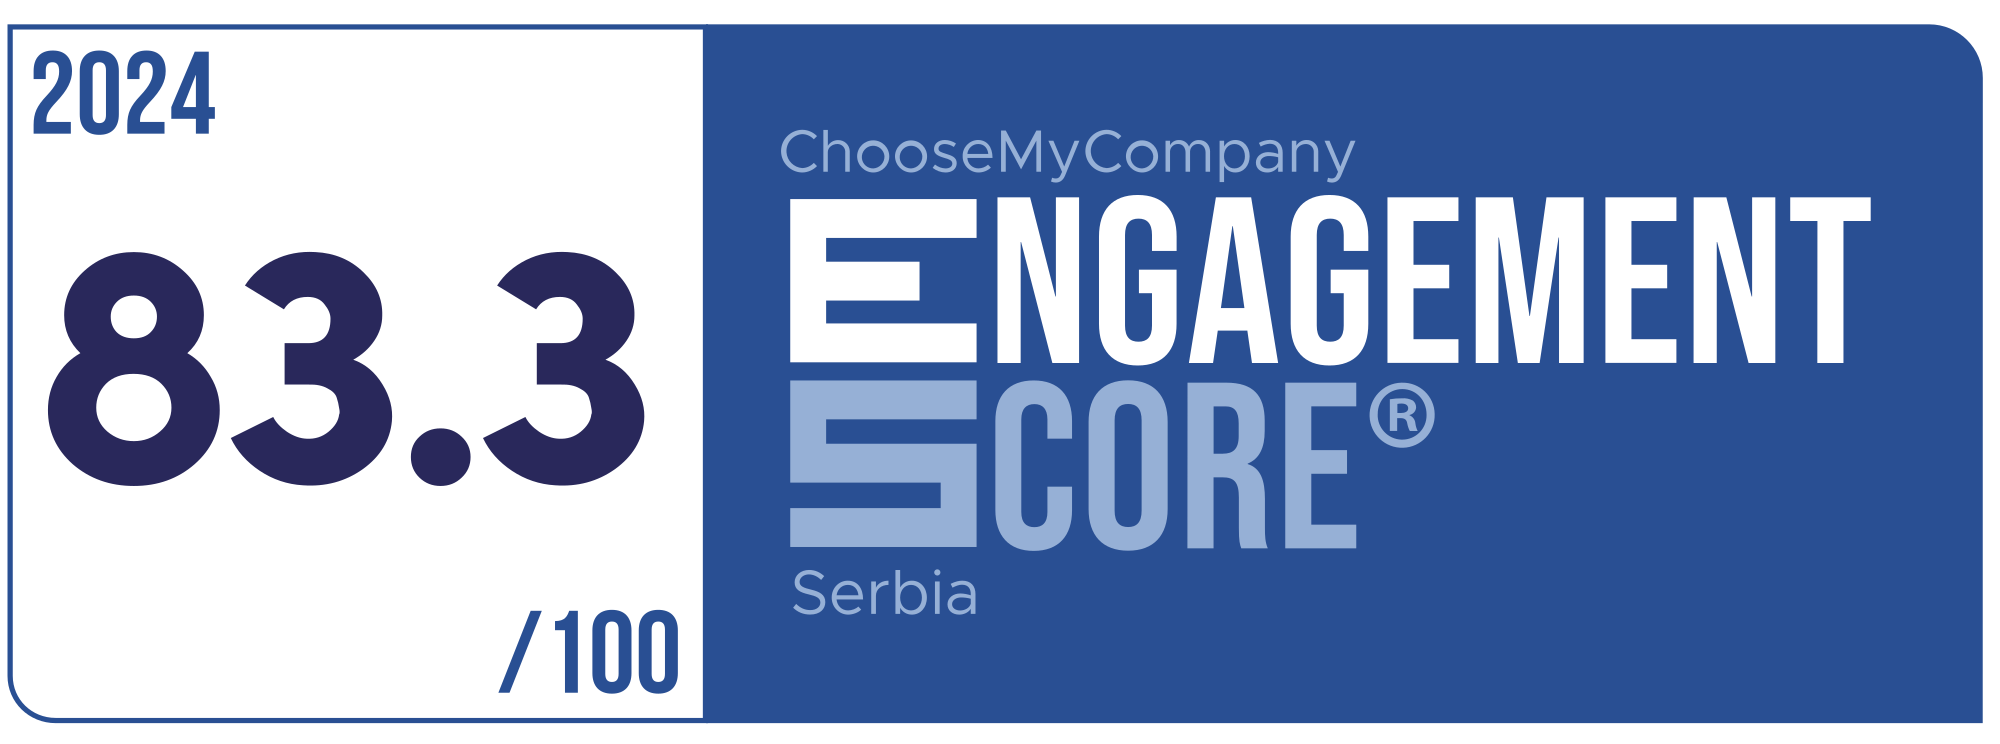 Label Engagement Score 2024 Serbia